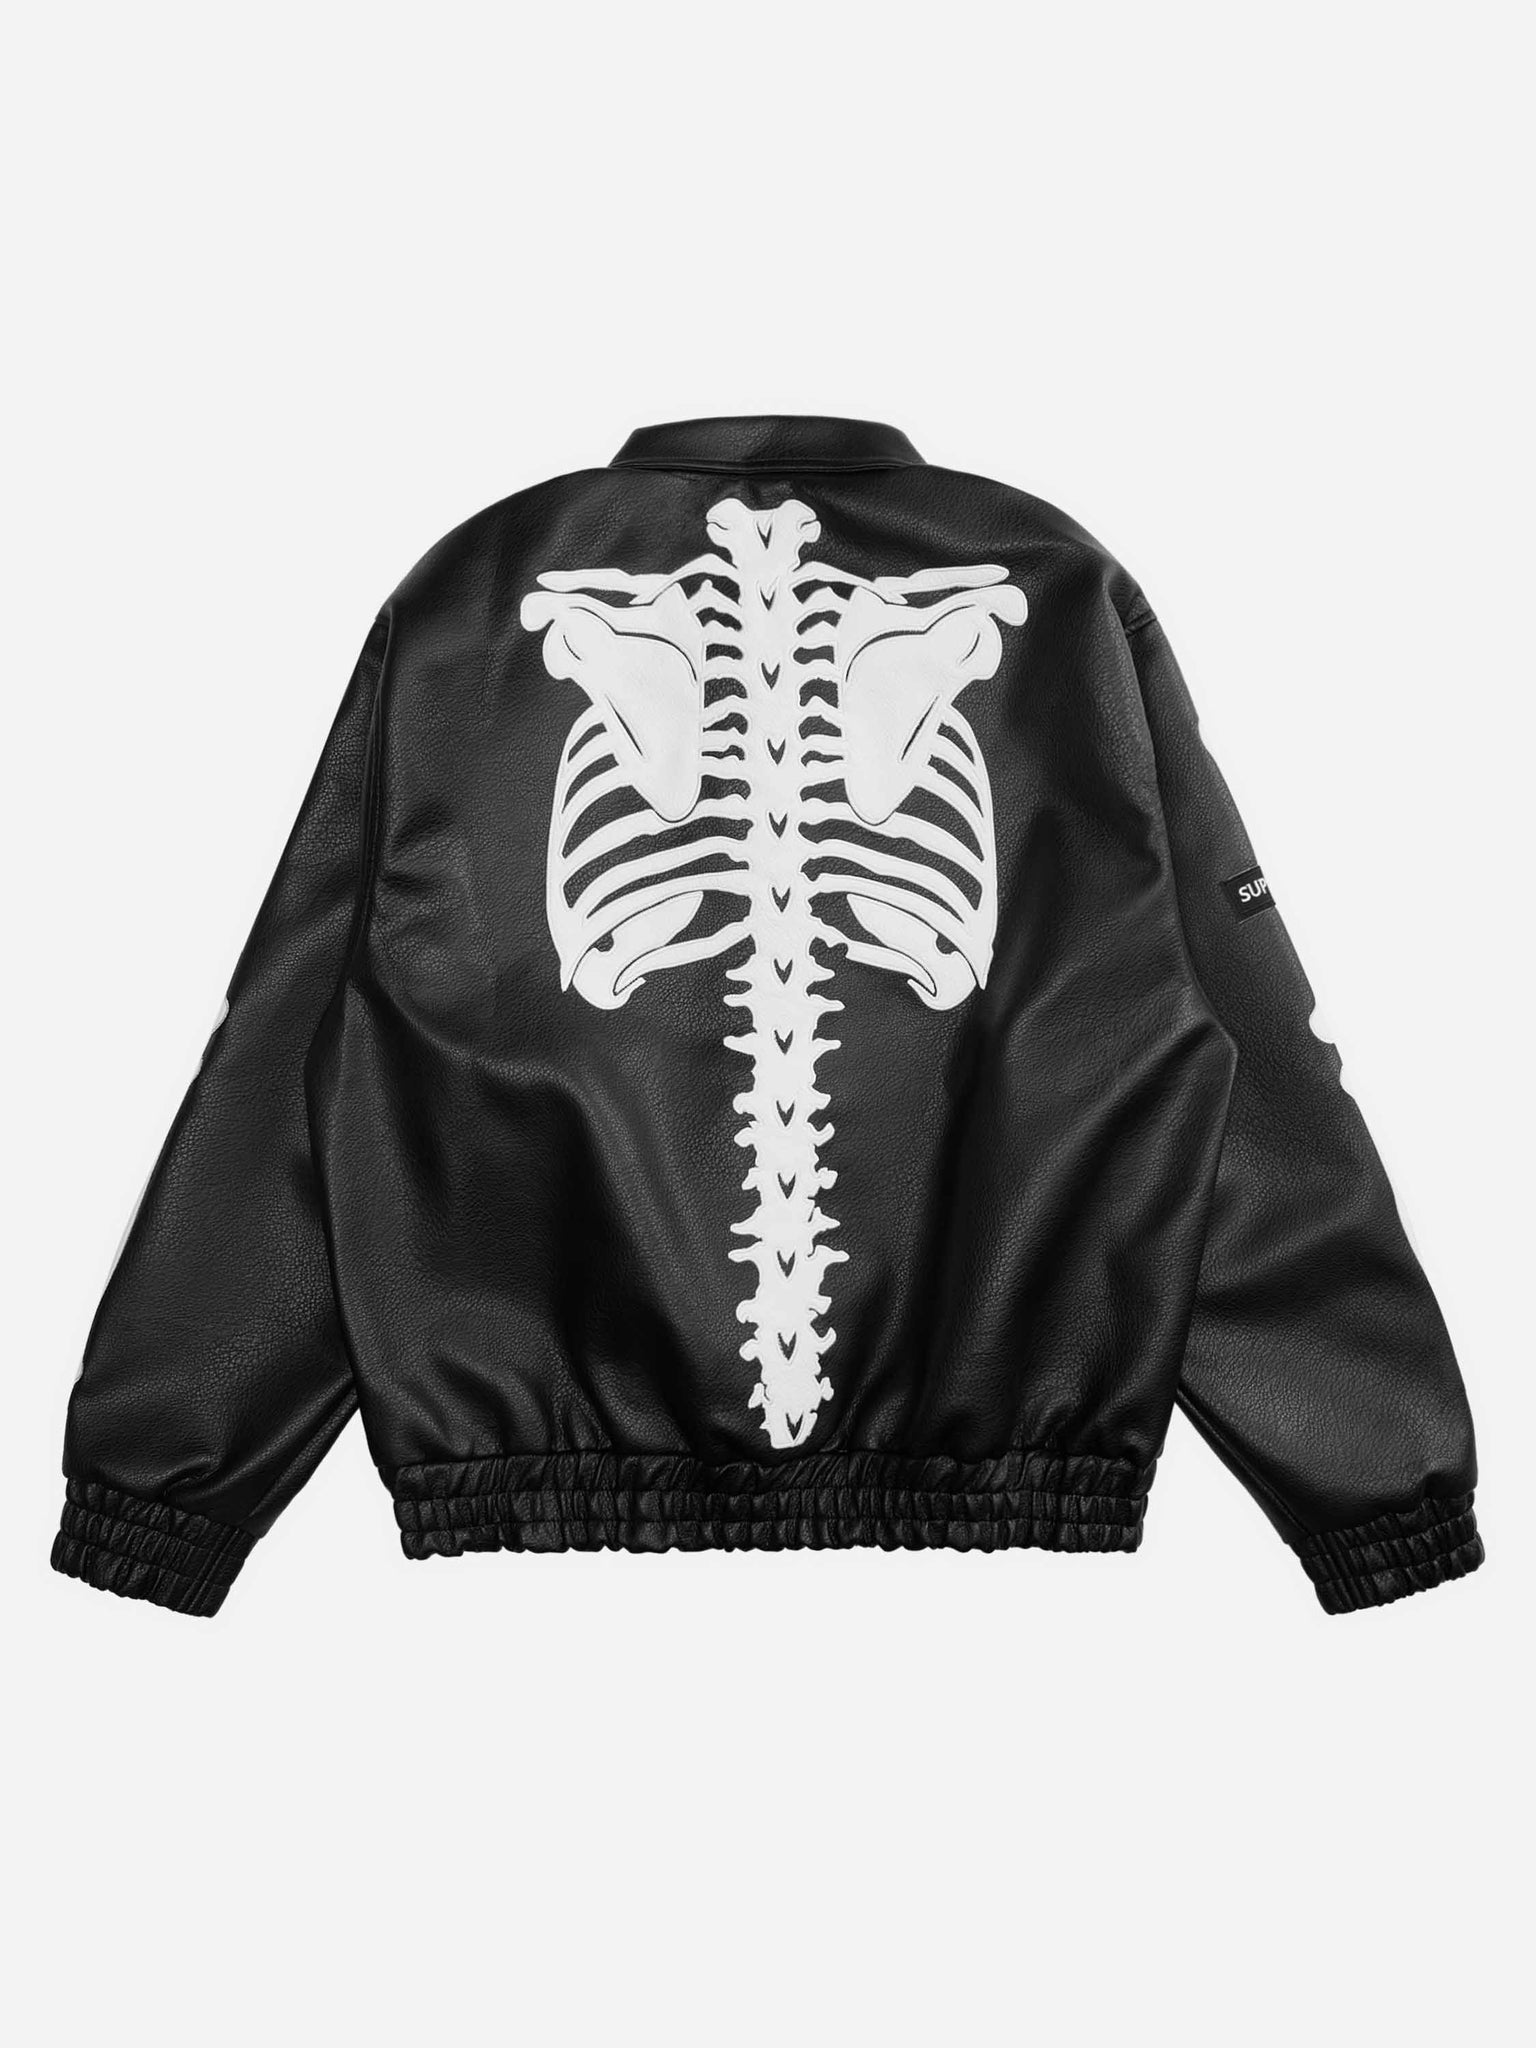 Thesupermade Hip Hop Bones Embroidered Leather Jacket - 1833